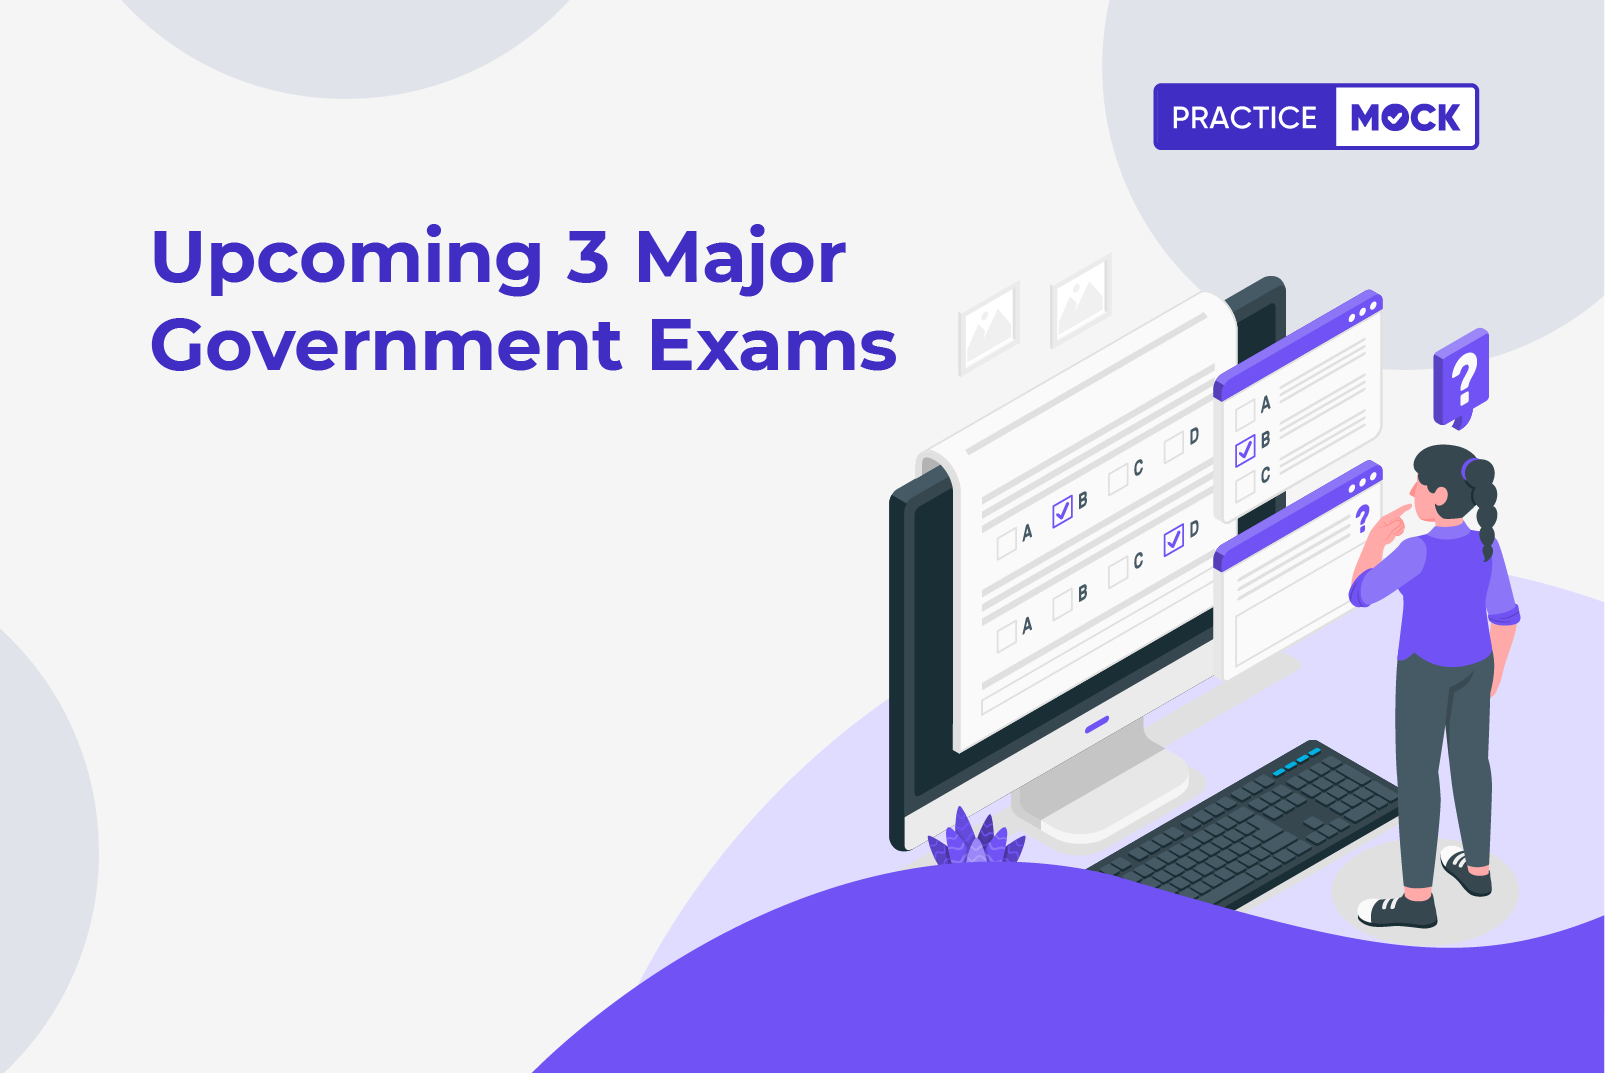 Upcoming 3 major Government Exams